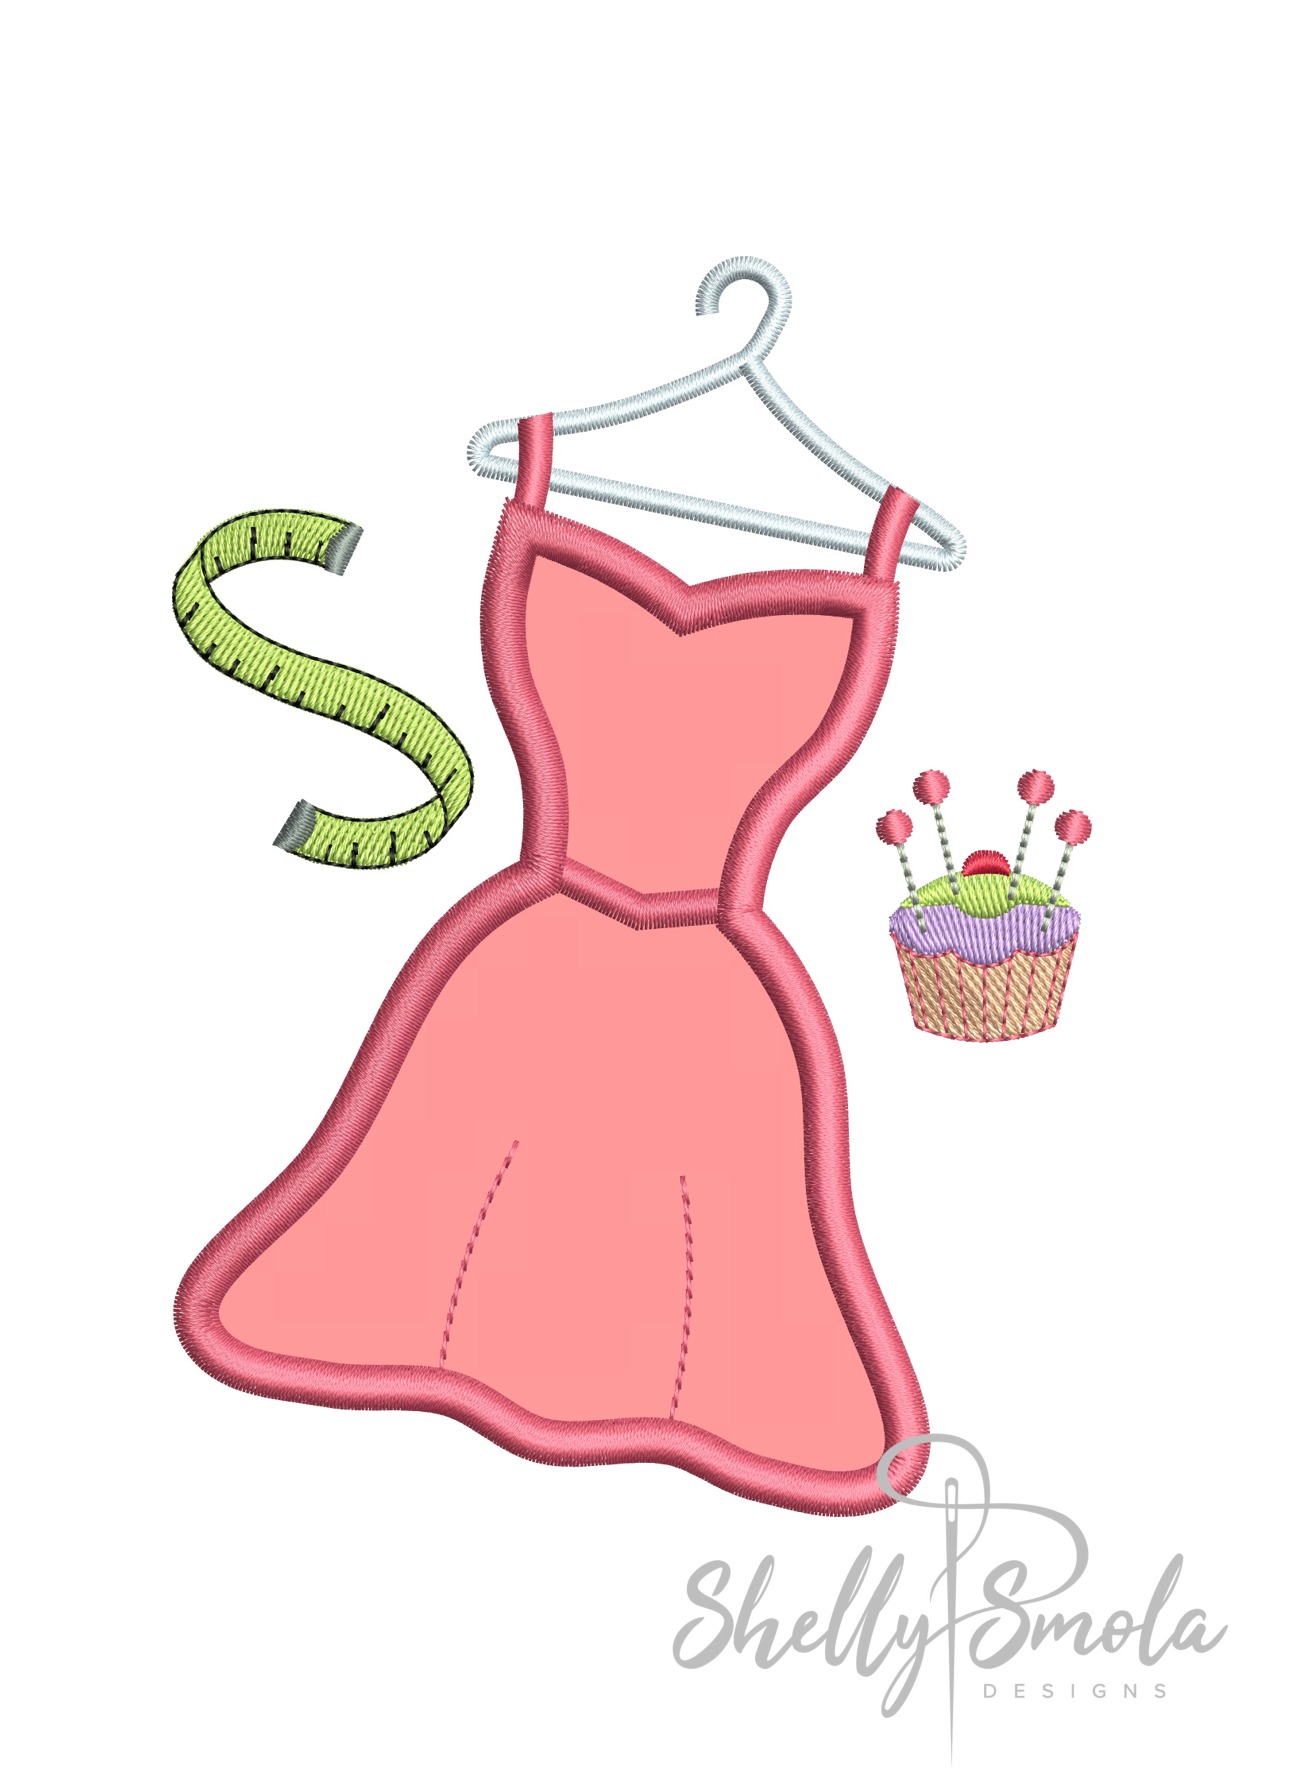 The Dressmaker by Shelly Smola